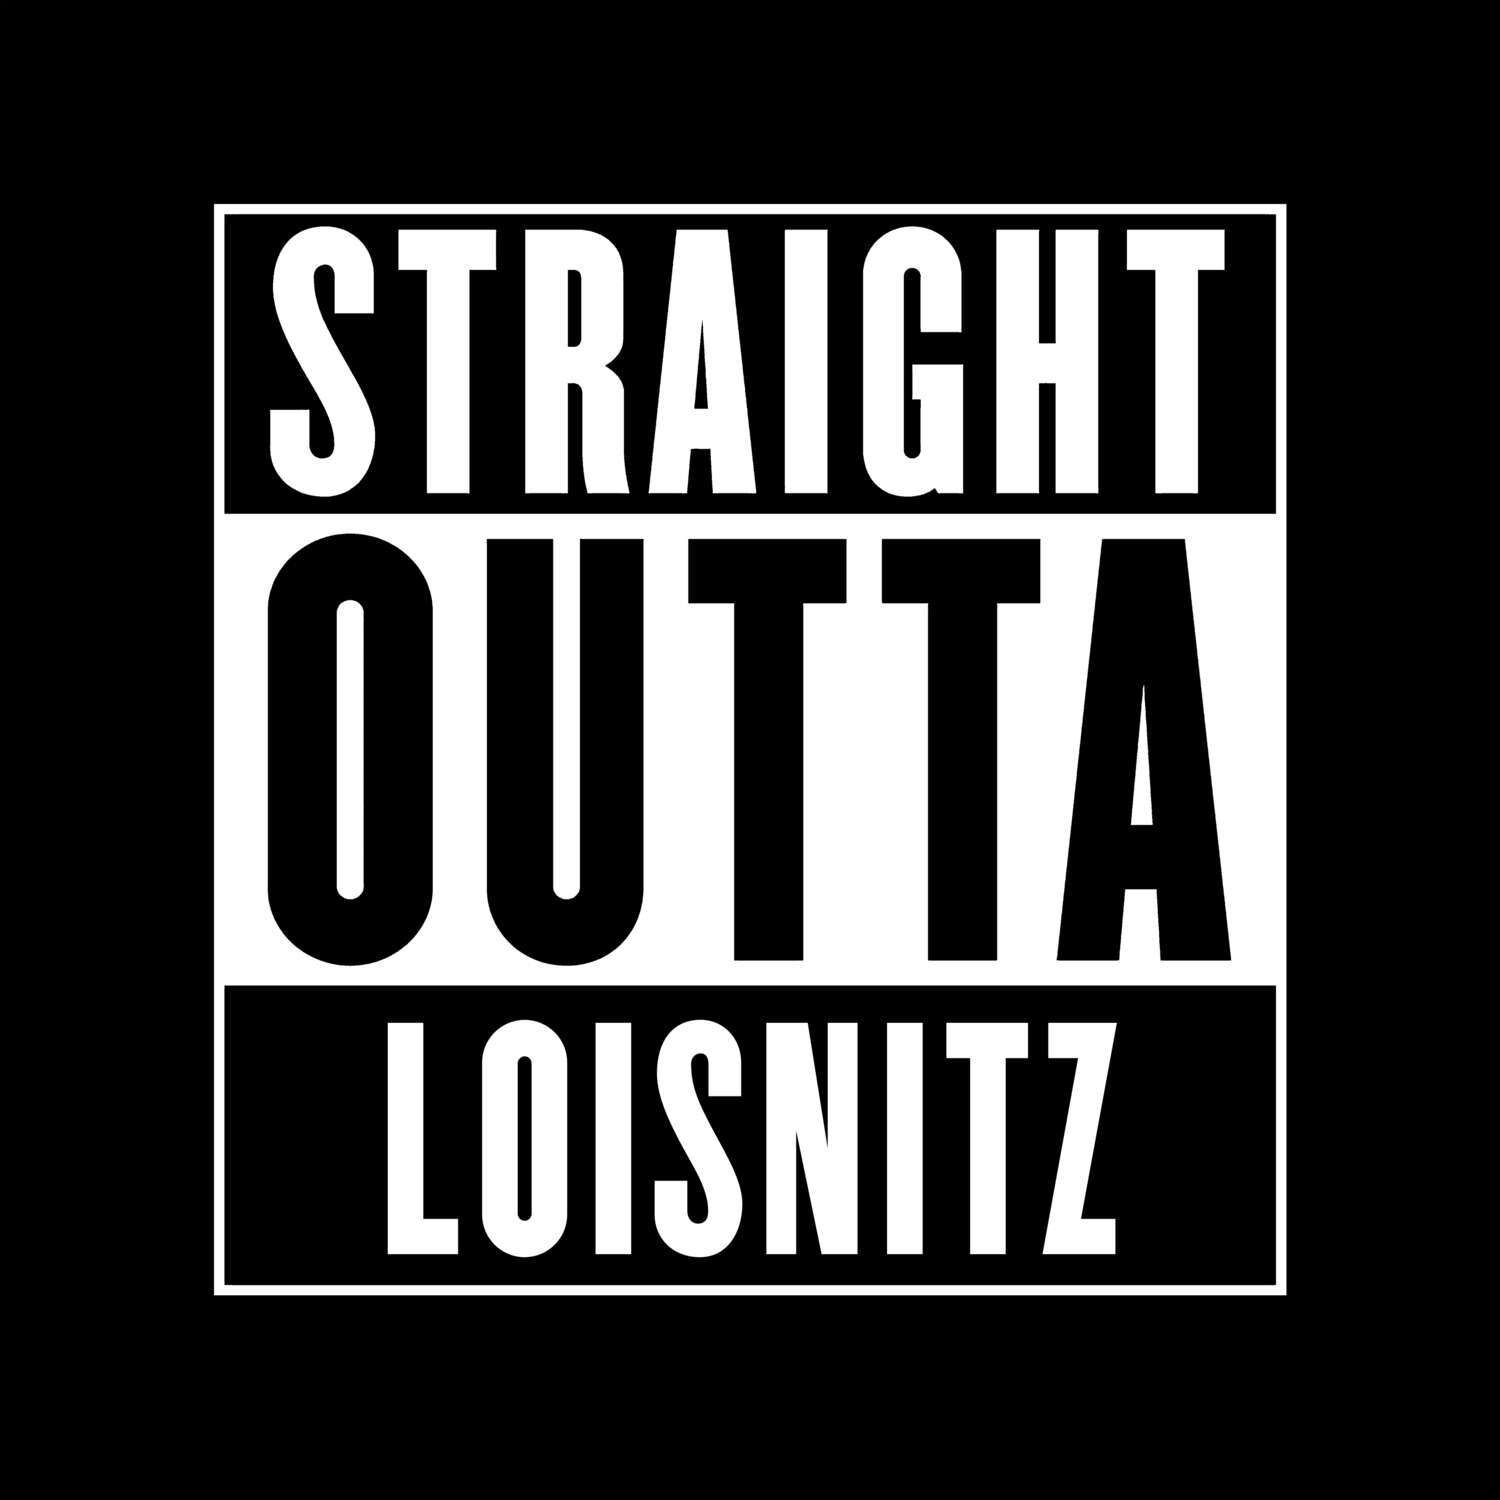 Loisnitz T-Shirt »Straight Outta«